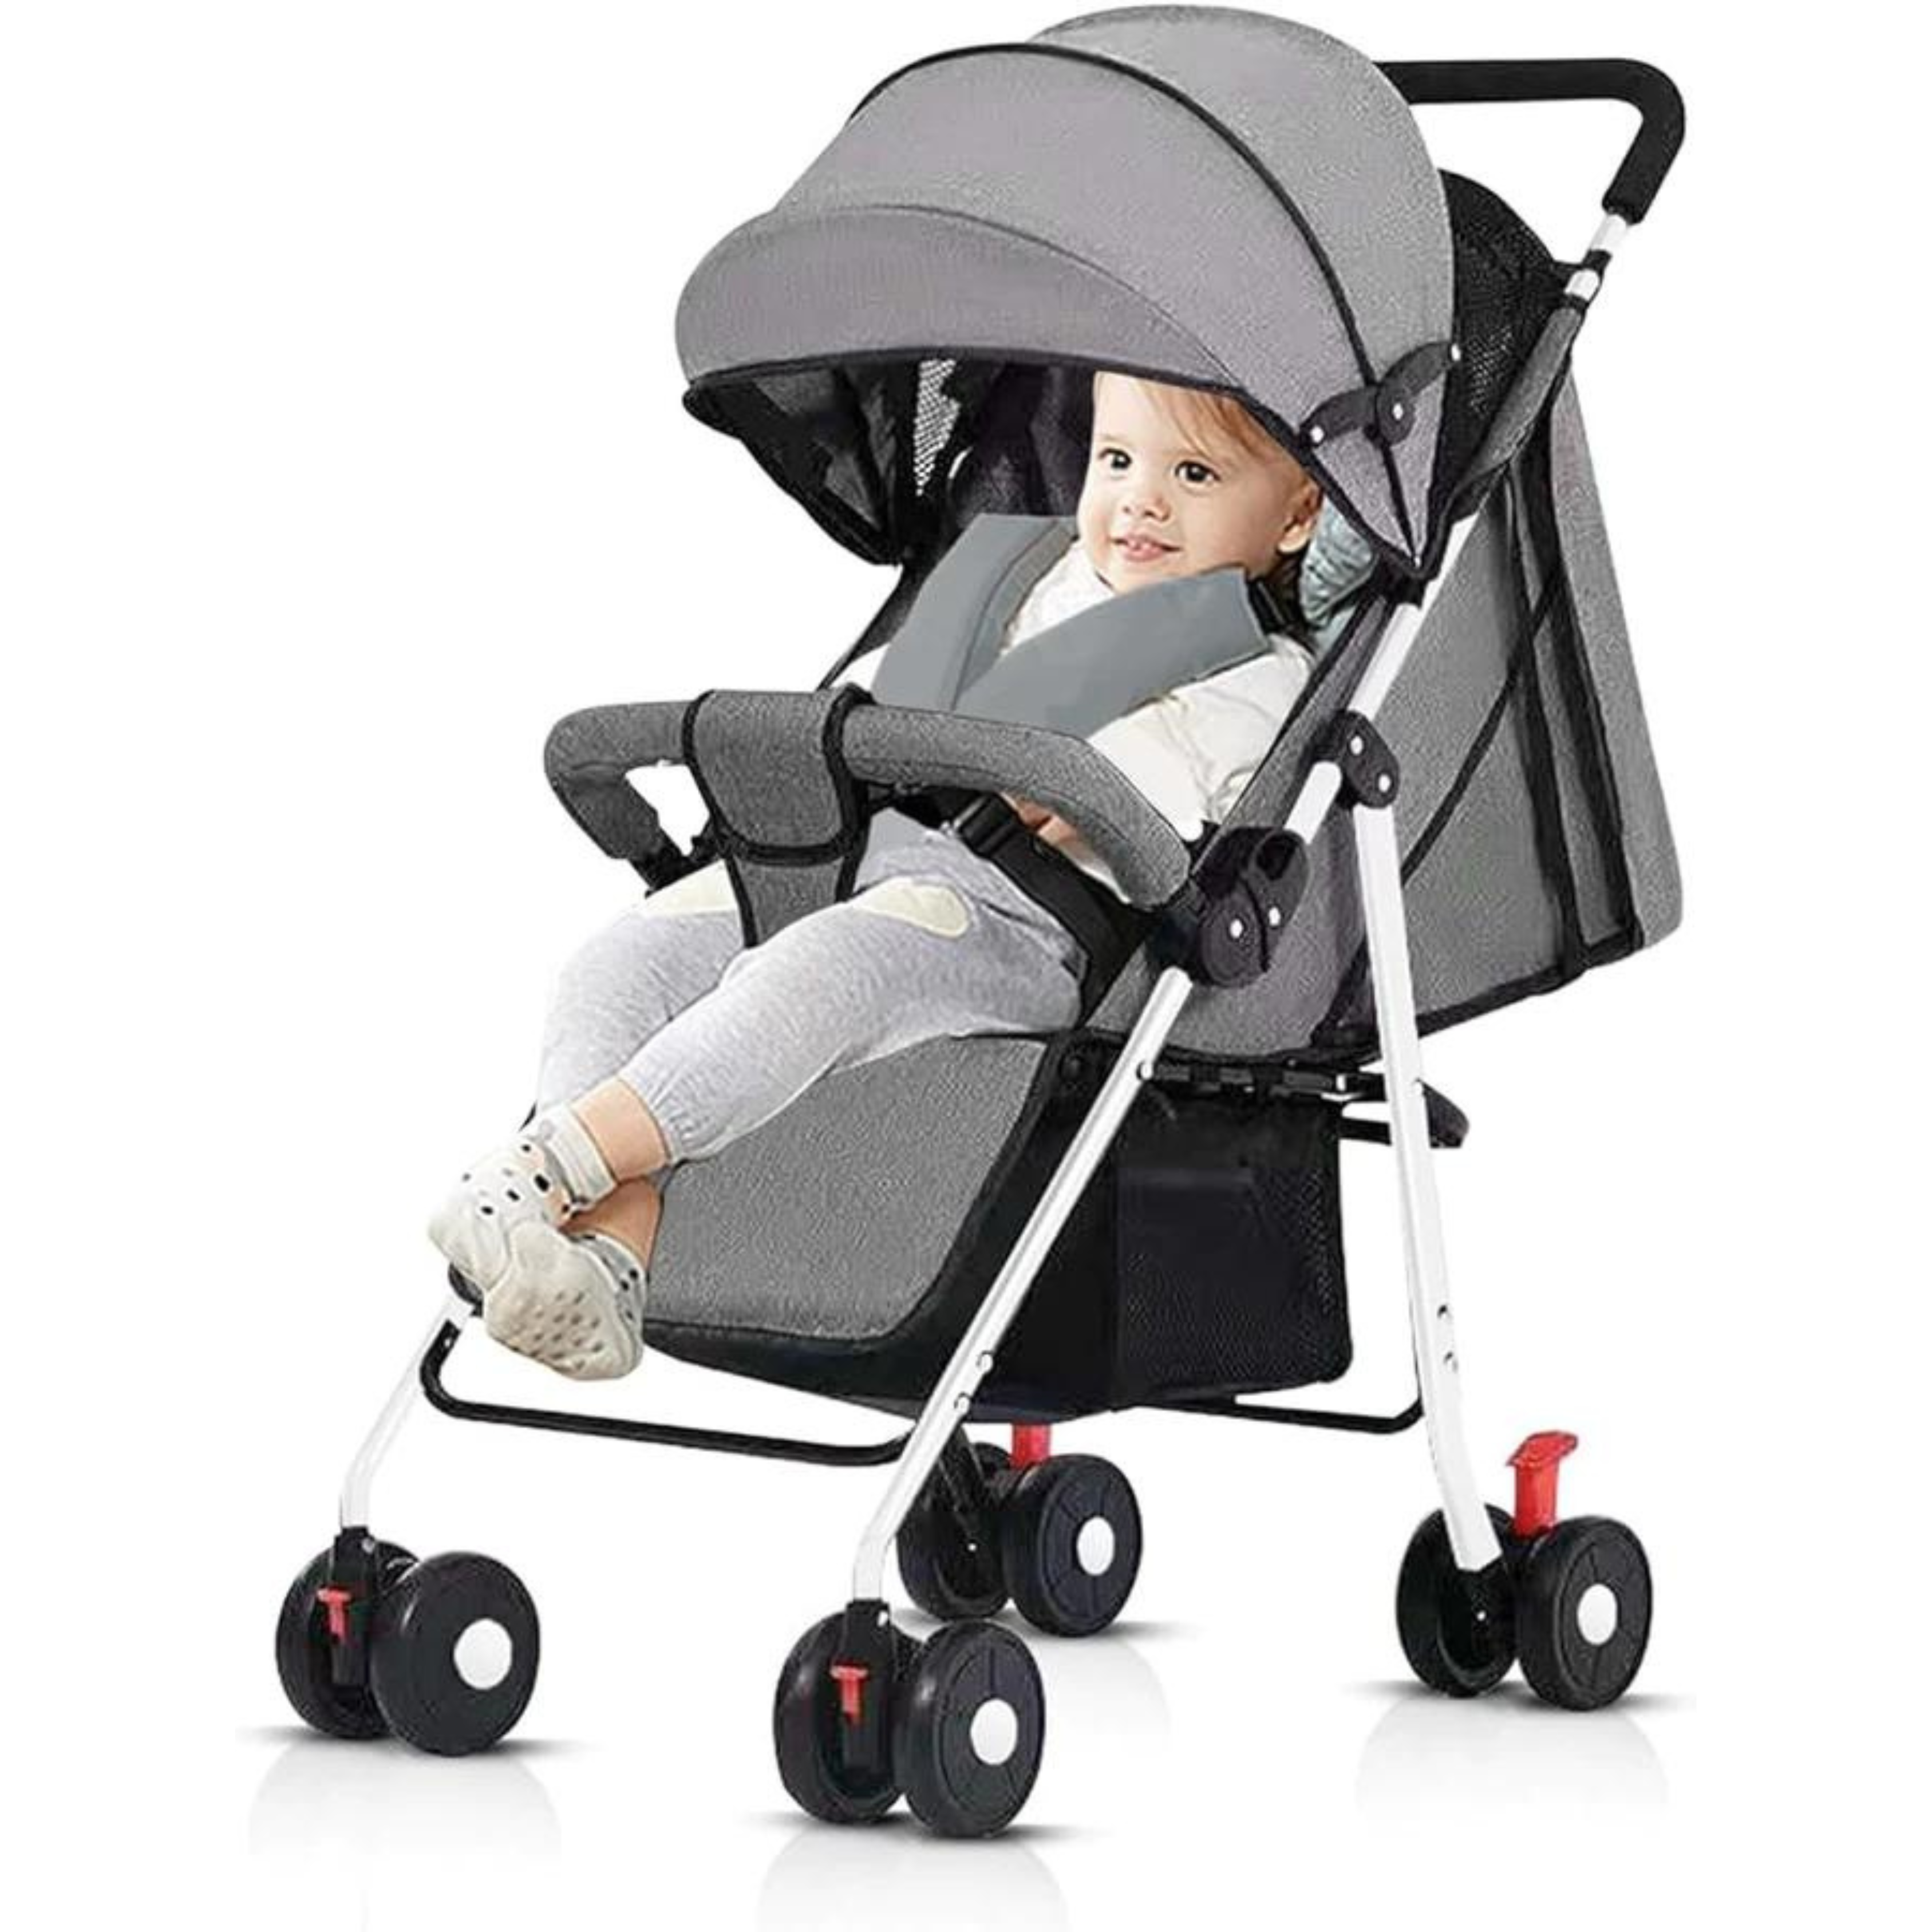 Occuwzz Lightweight Stroller, 0-36 months Lightweight Travel Stroller with Storage Basket Foldable Travel Pram Detachable Bumper for Toddler Stroller,5-Point Safety Harness,0-15kg